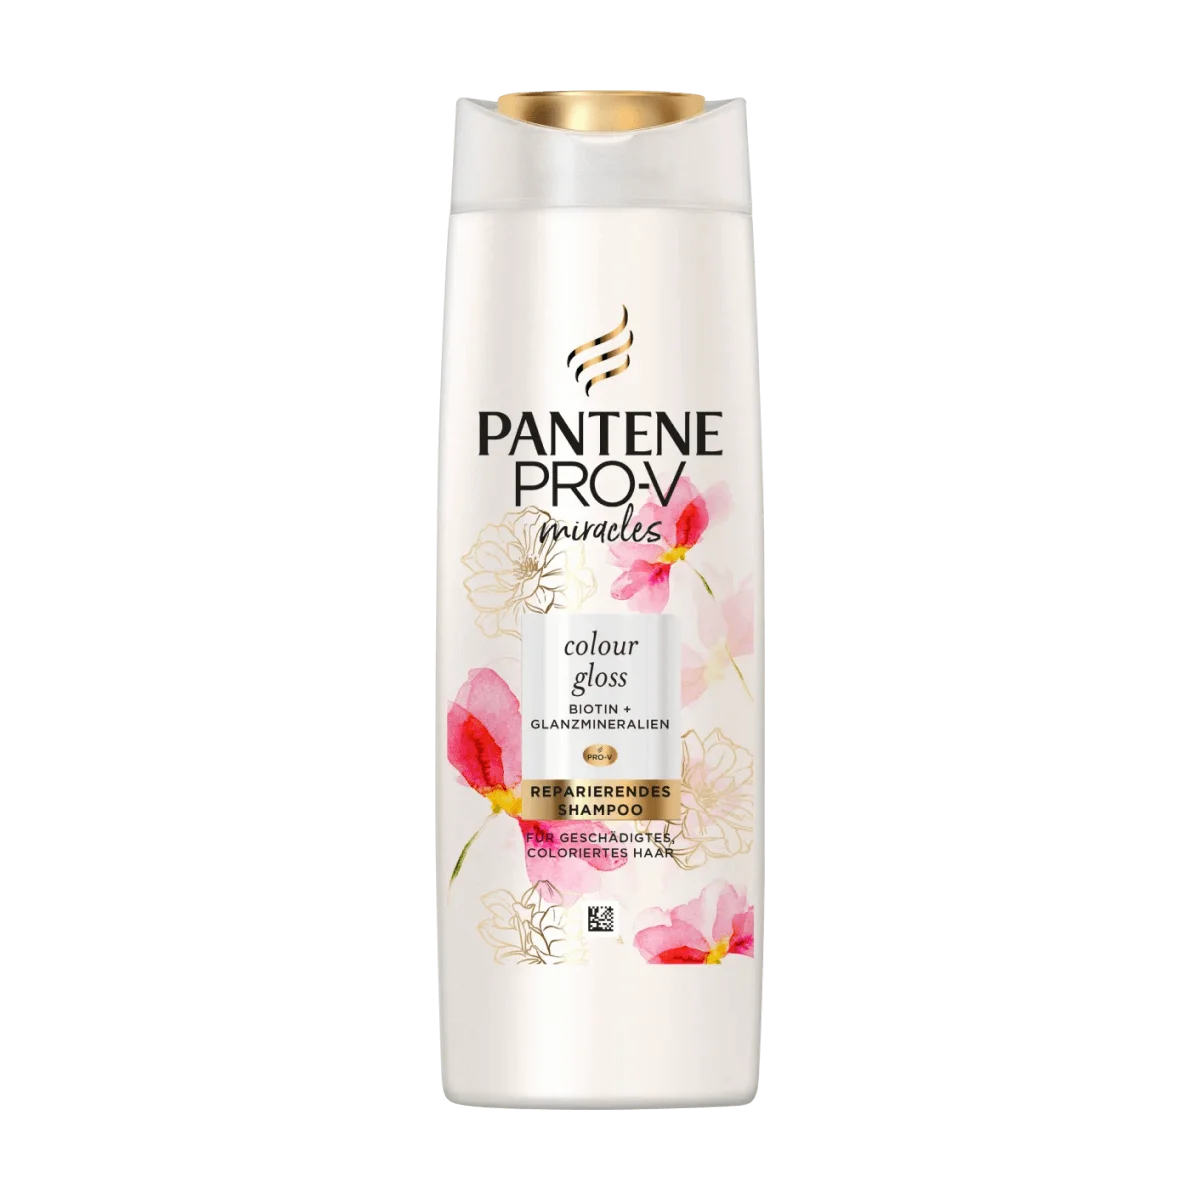 PANTENE PRO-V Shampoo miracles colour gloss, 250 ml